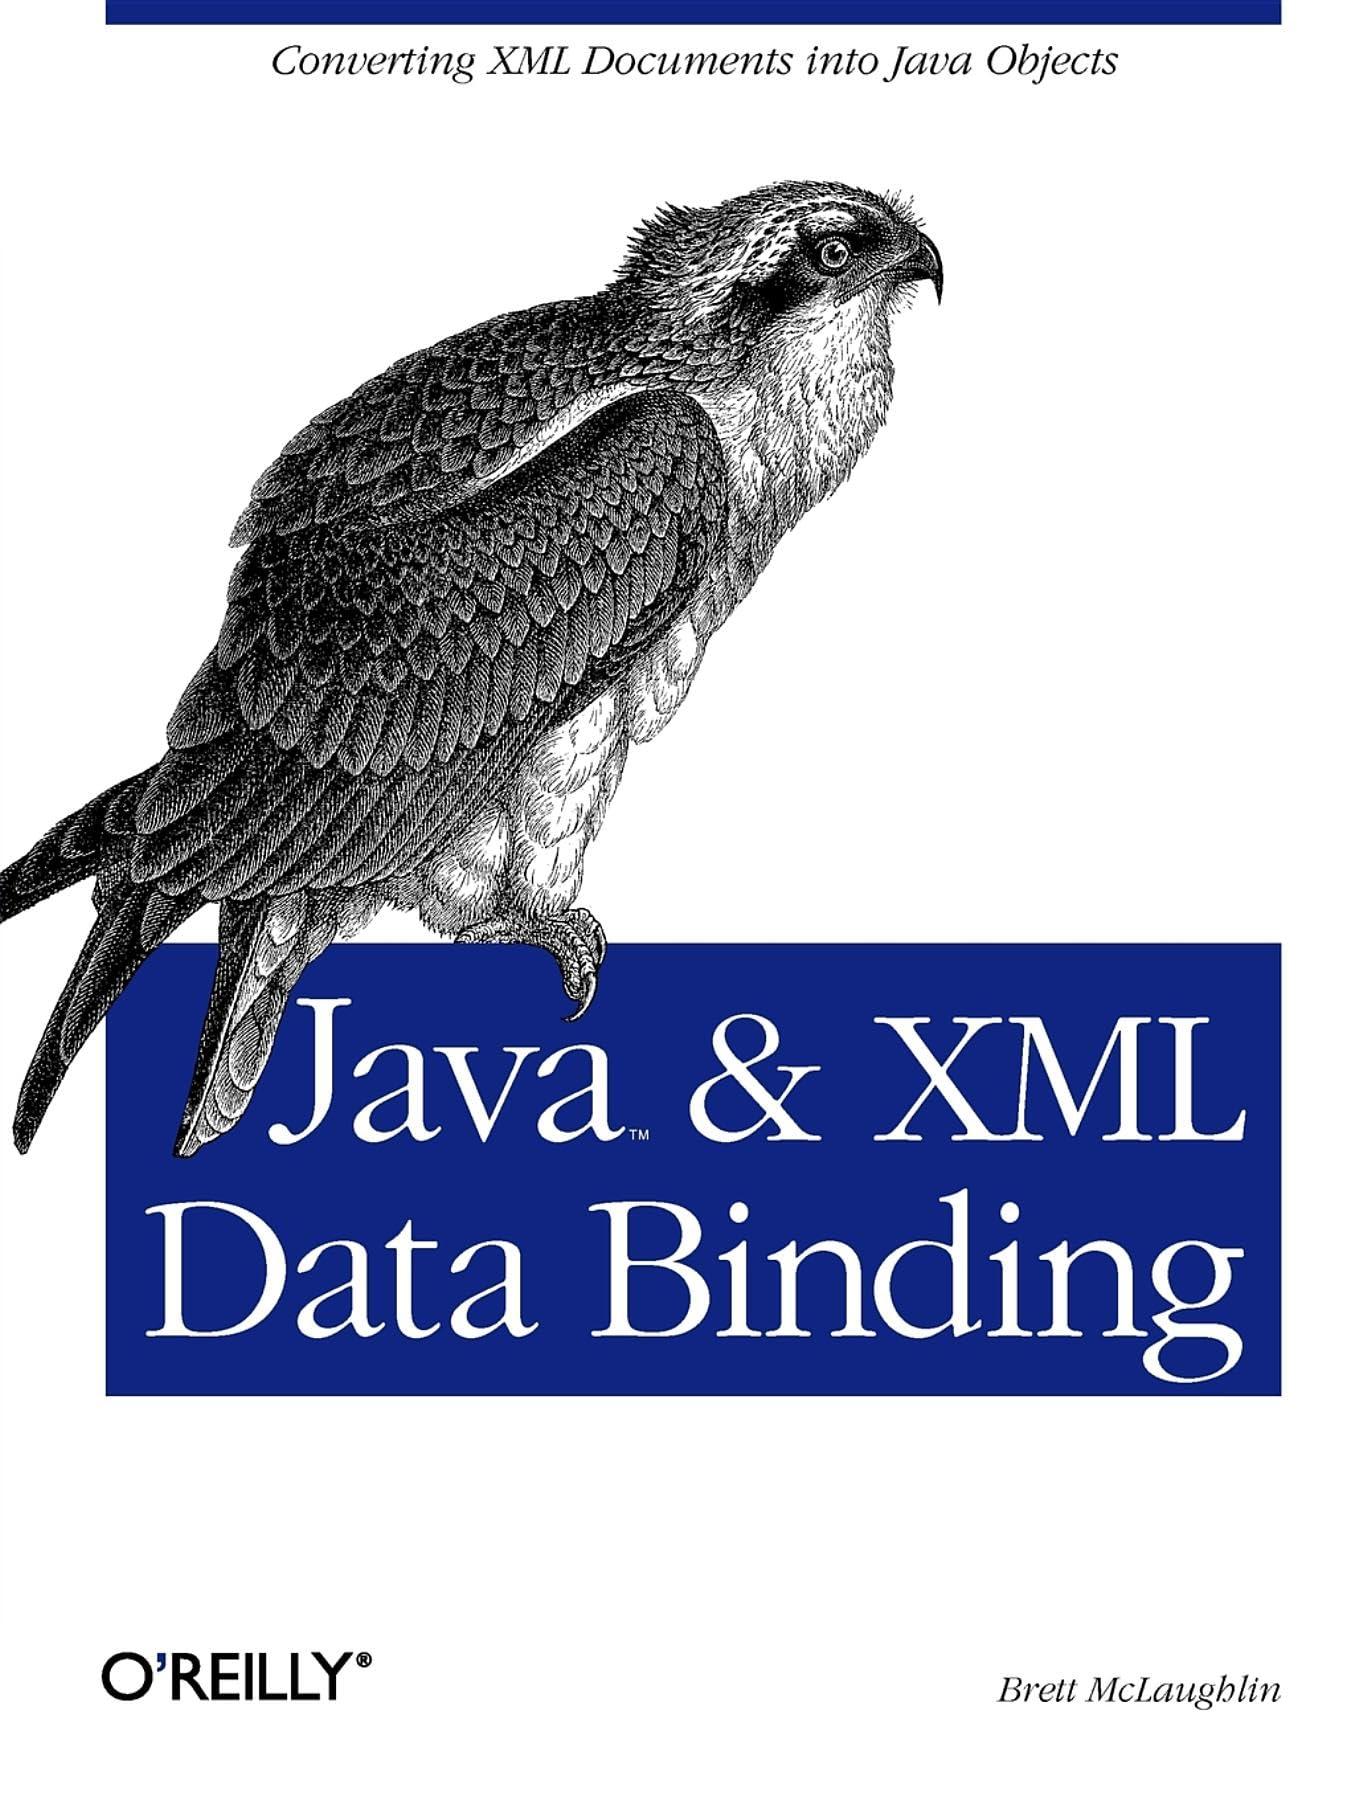 java and xml data binding 1st edition brett mclaughlin 0596002785, 978-0596002787